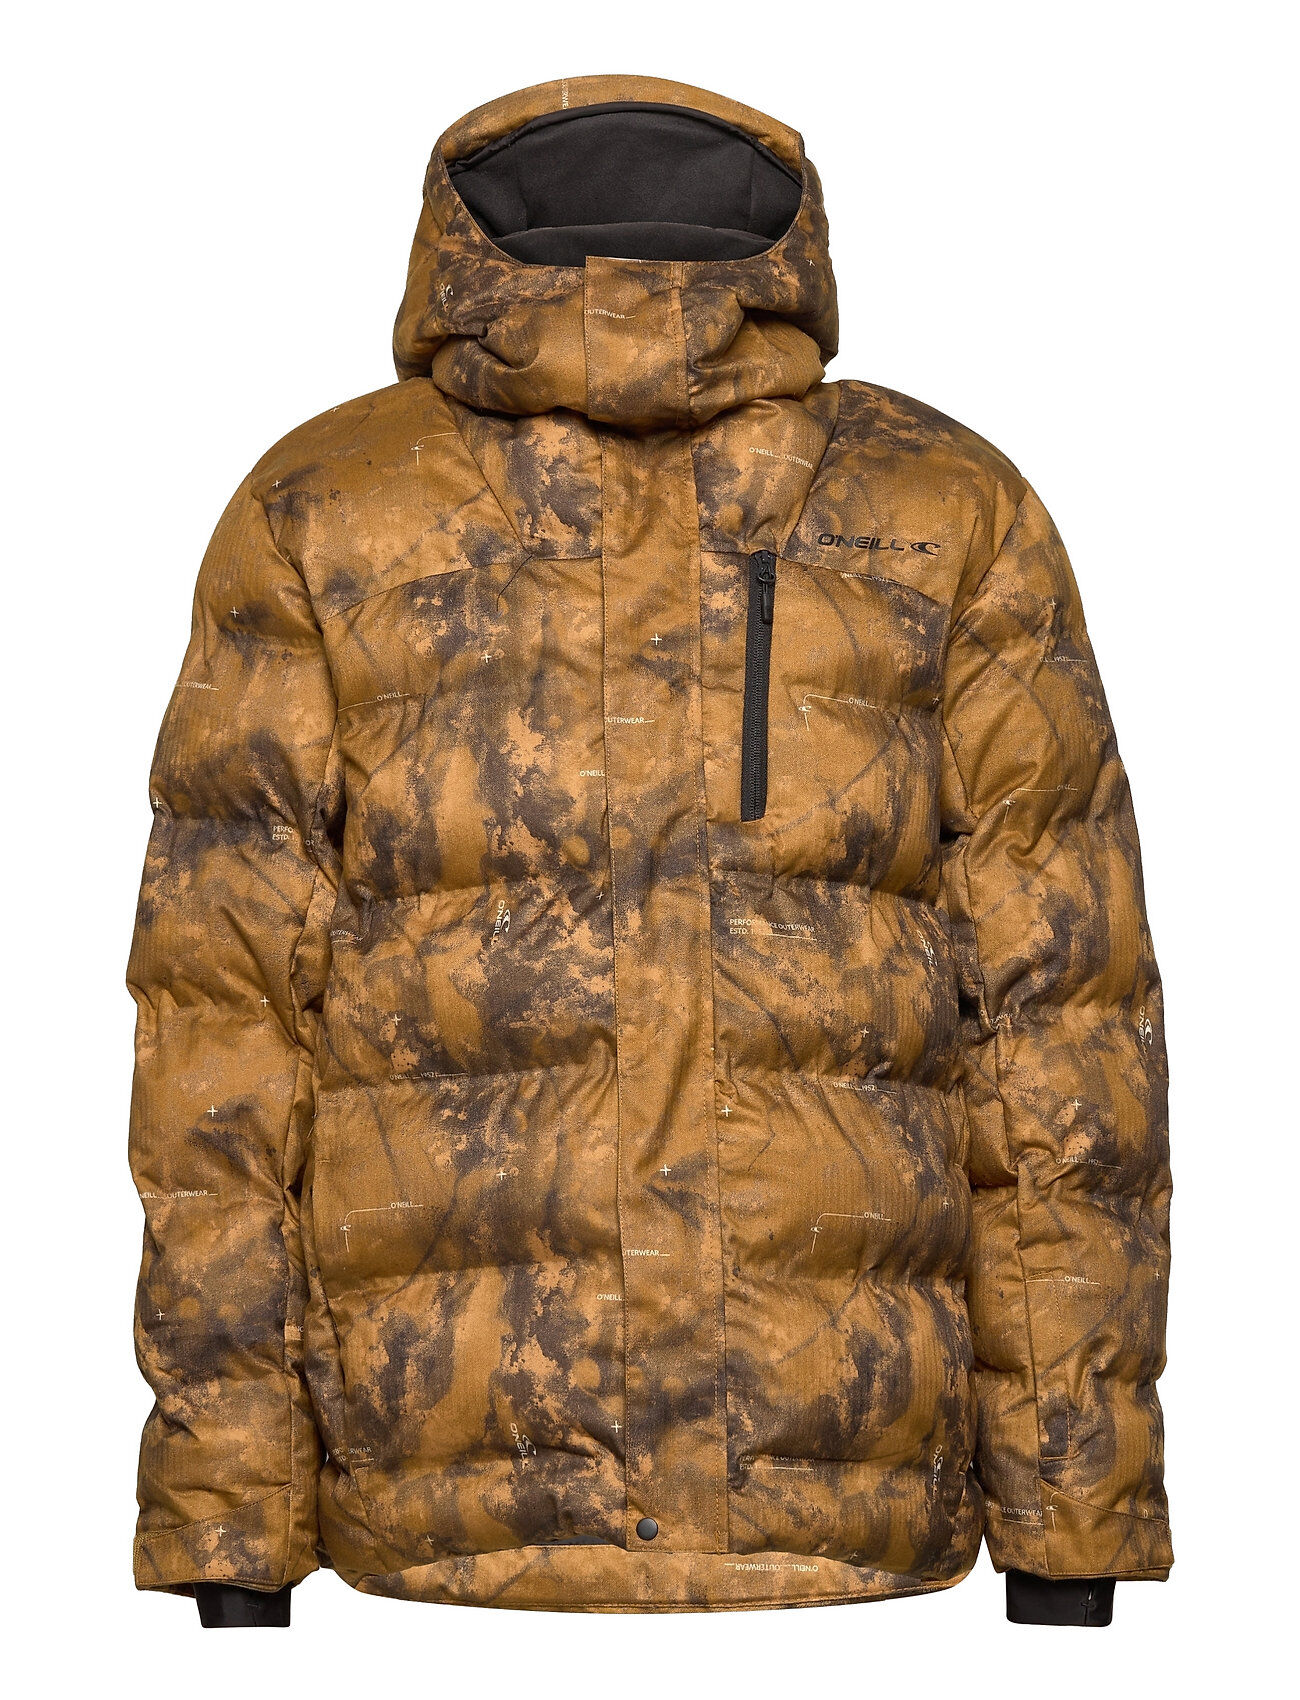 O'neill Xtrm Mountain Jacket Outerwear Sport Jackets Multi/mønstret O'neill